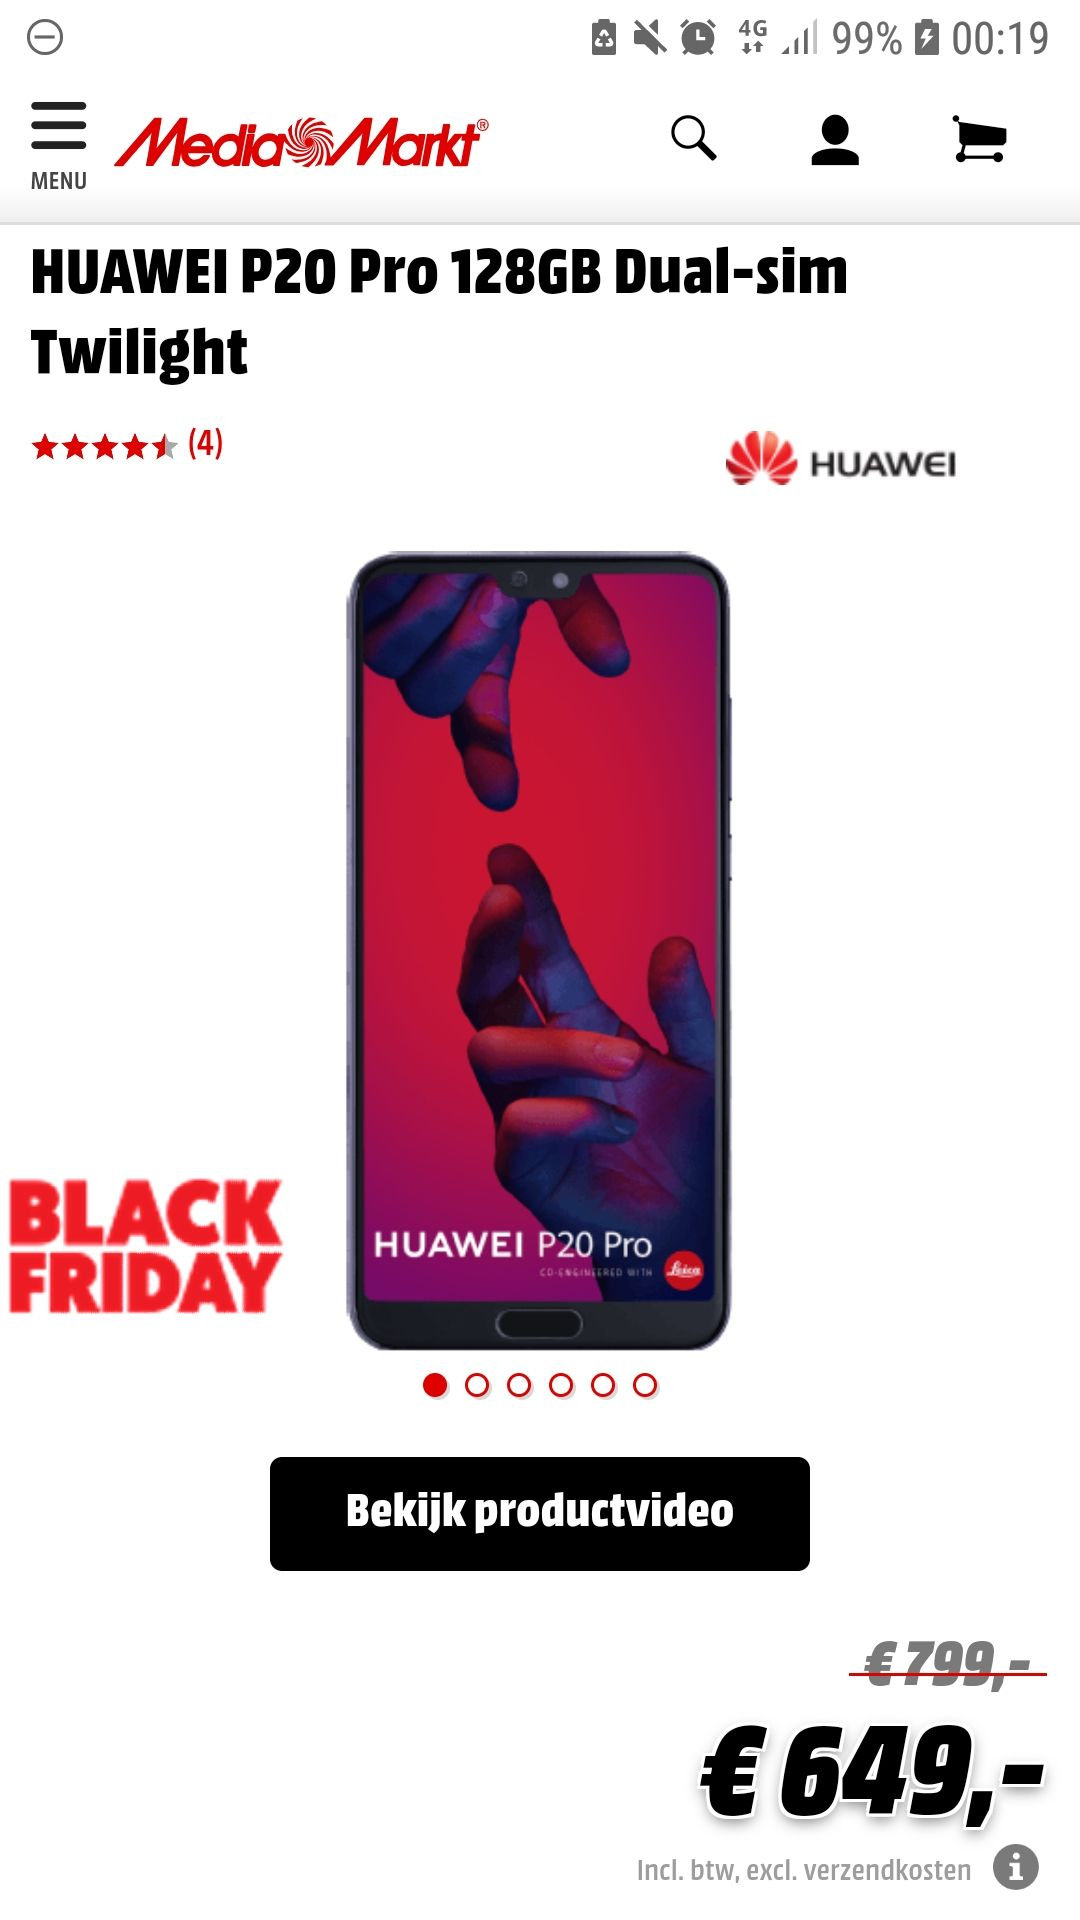 Huawei p20 pro black friday 2018 eviction